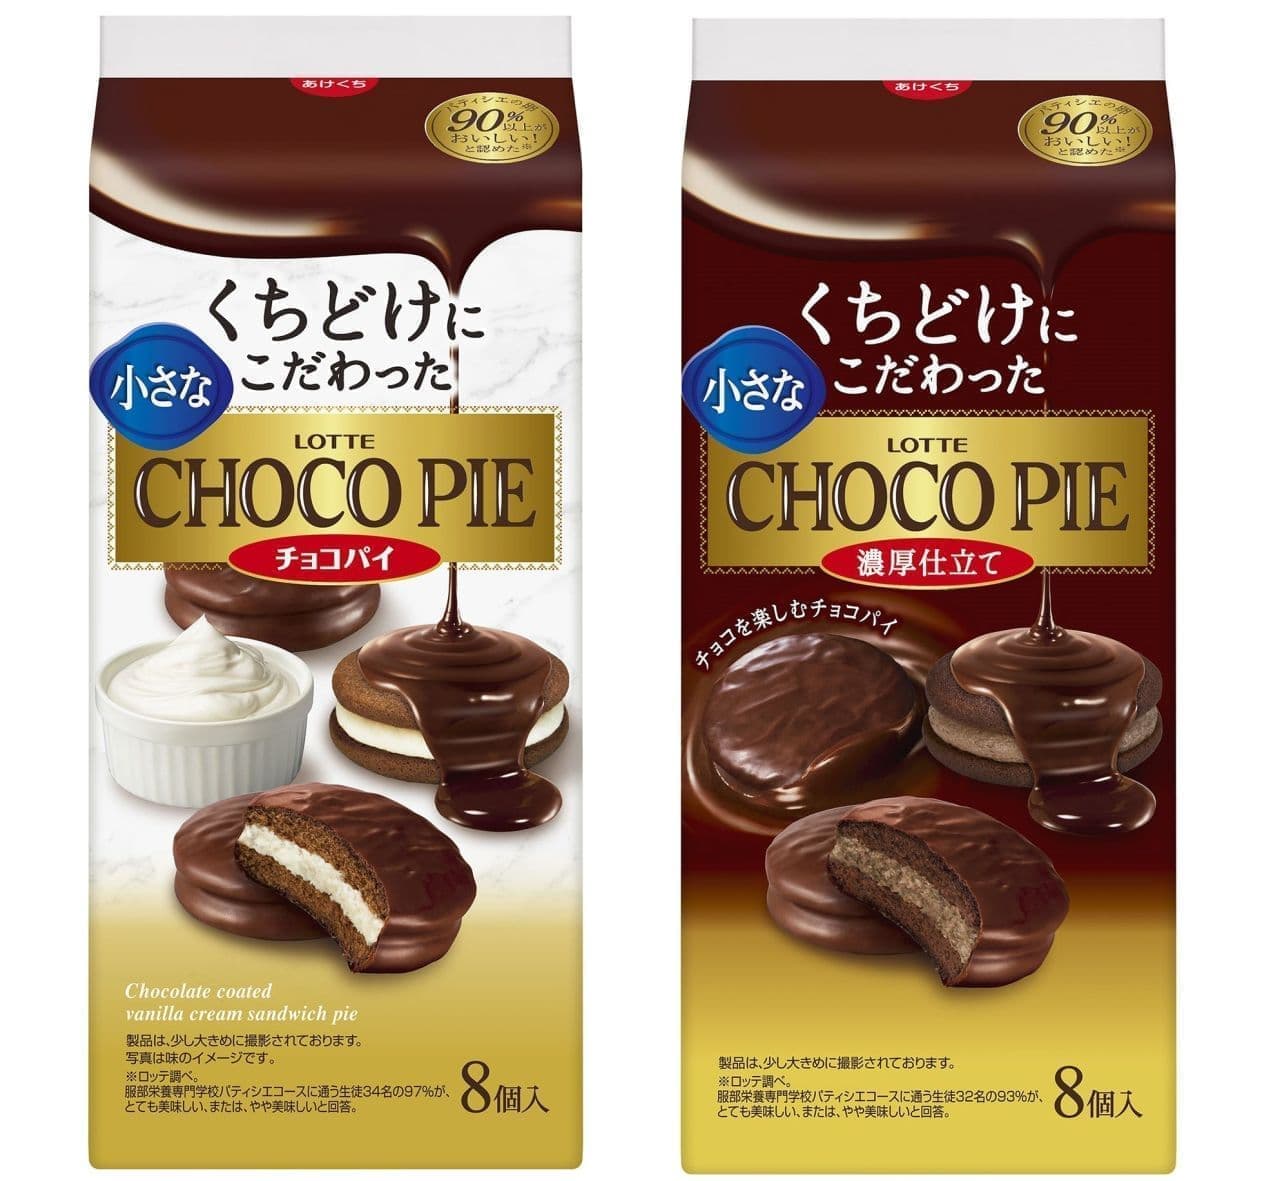 Lotte "Small Choco Pie" and "Small Choco Pie [Deep Tailoring]".